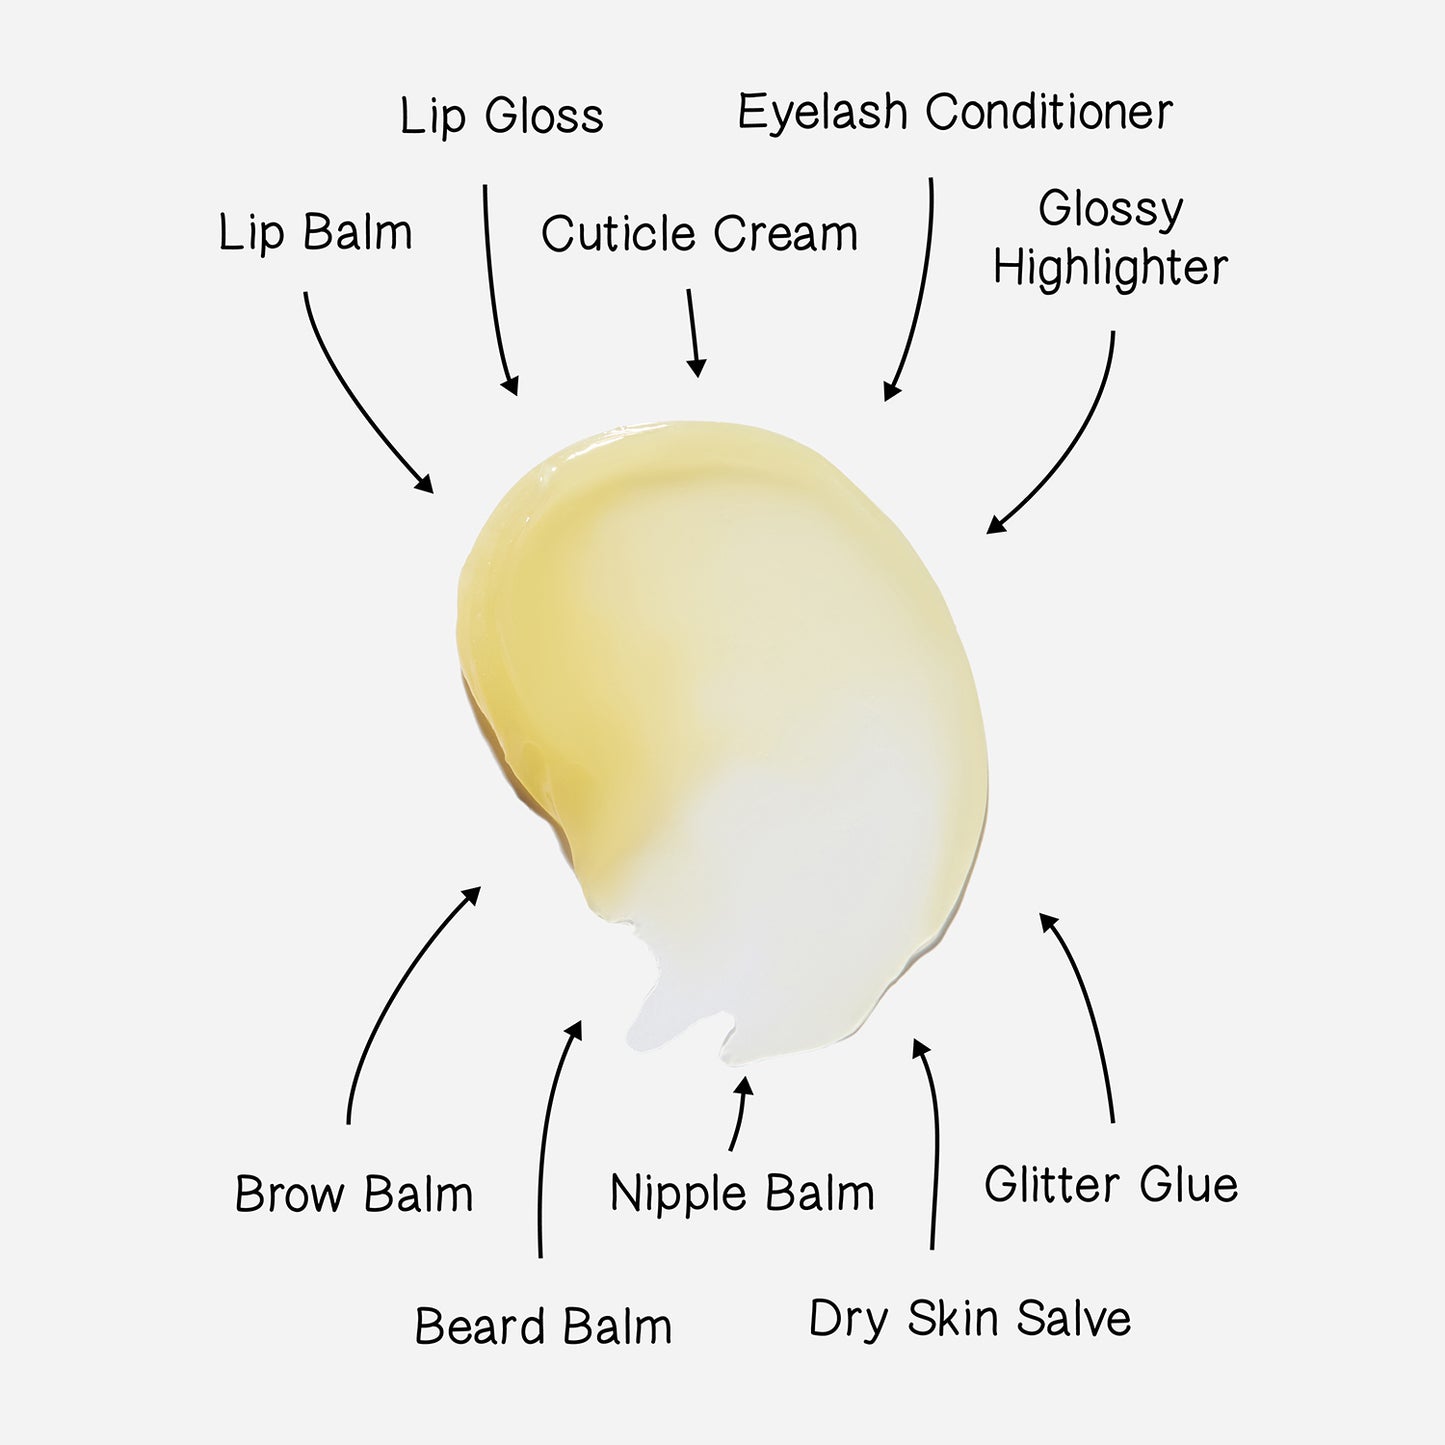 Dr.Lipp Original Nipple Balm 6 pack uses - lip balm, lip gloss, cuticle cream, eyelash conditioner, glossy highlighter, glitter glue, dry skin salve, nipple balm, beard balm, brow balm